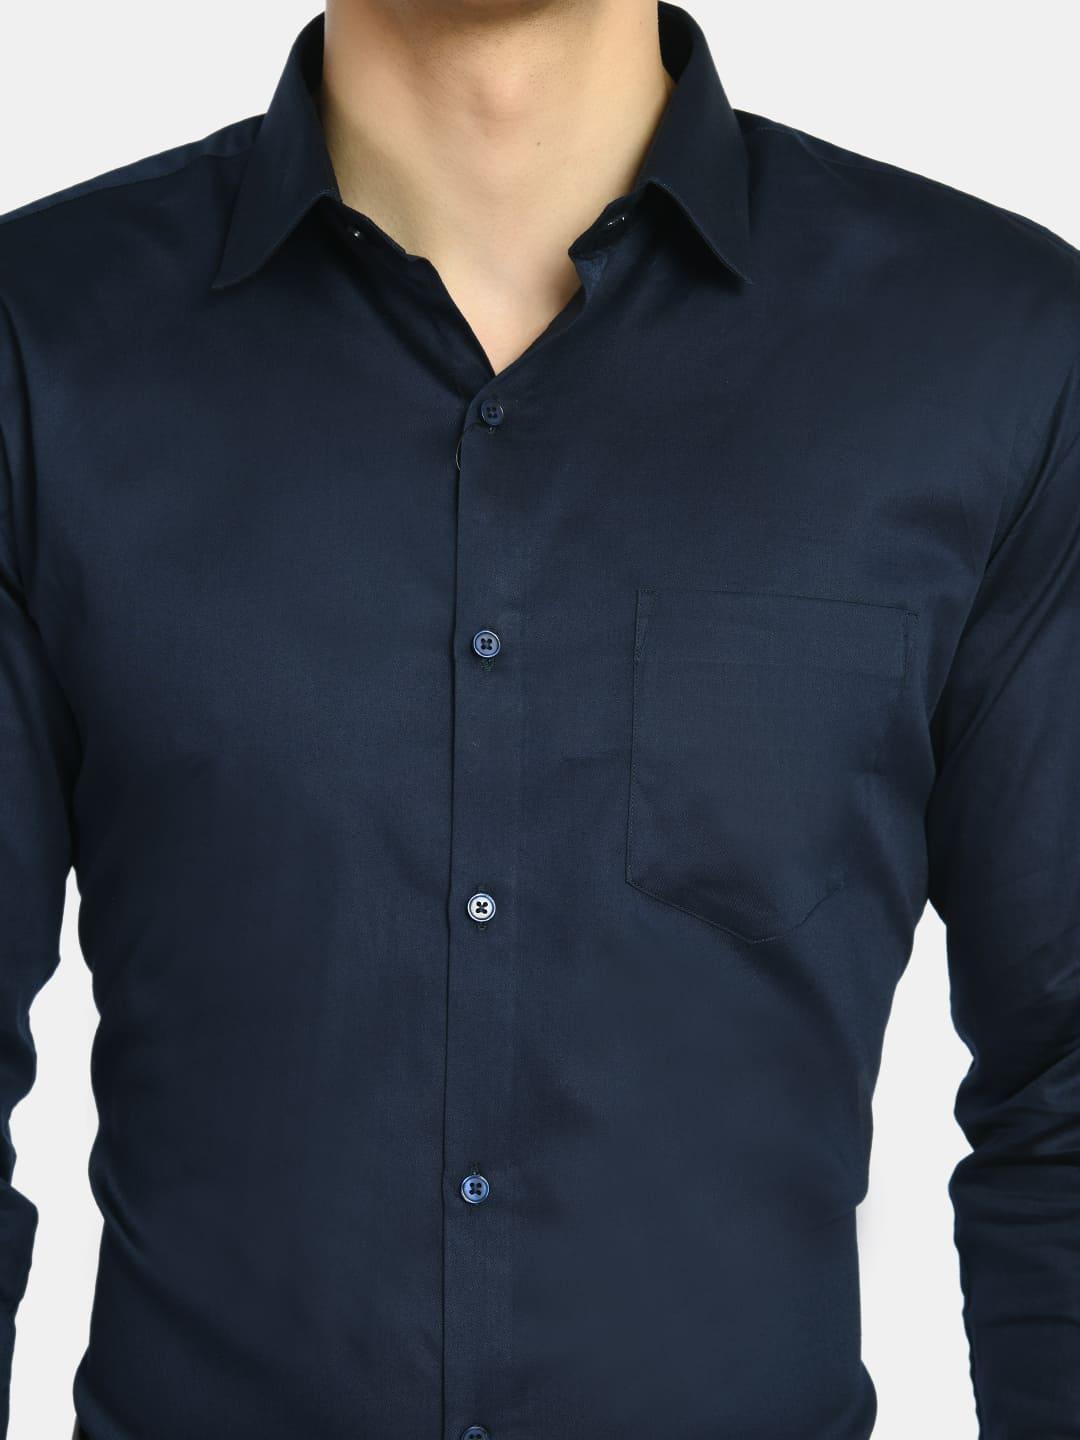 Men's Navy Spread Collar Solid Giza Cotton Formal Shirt